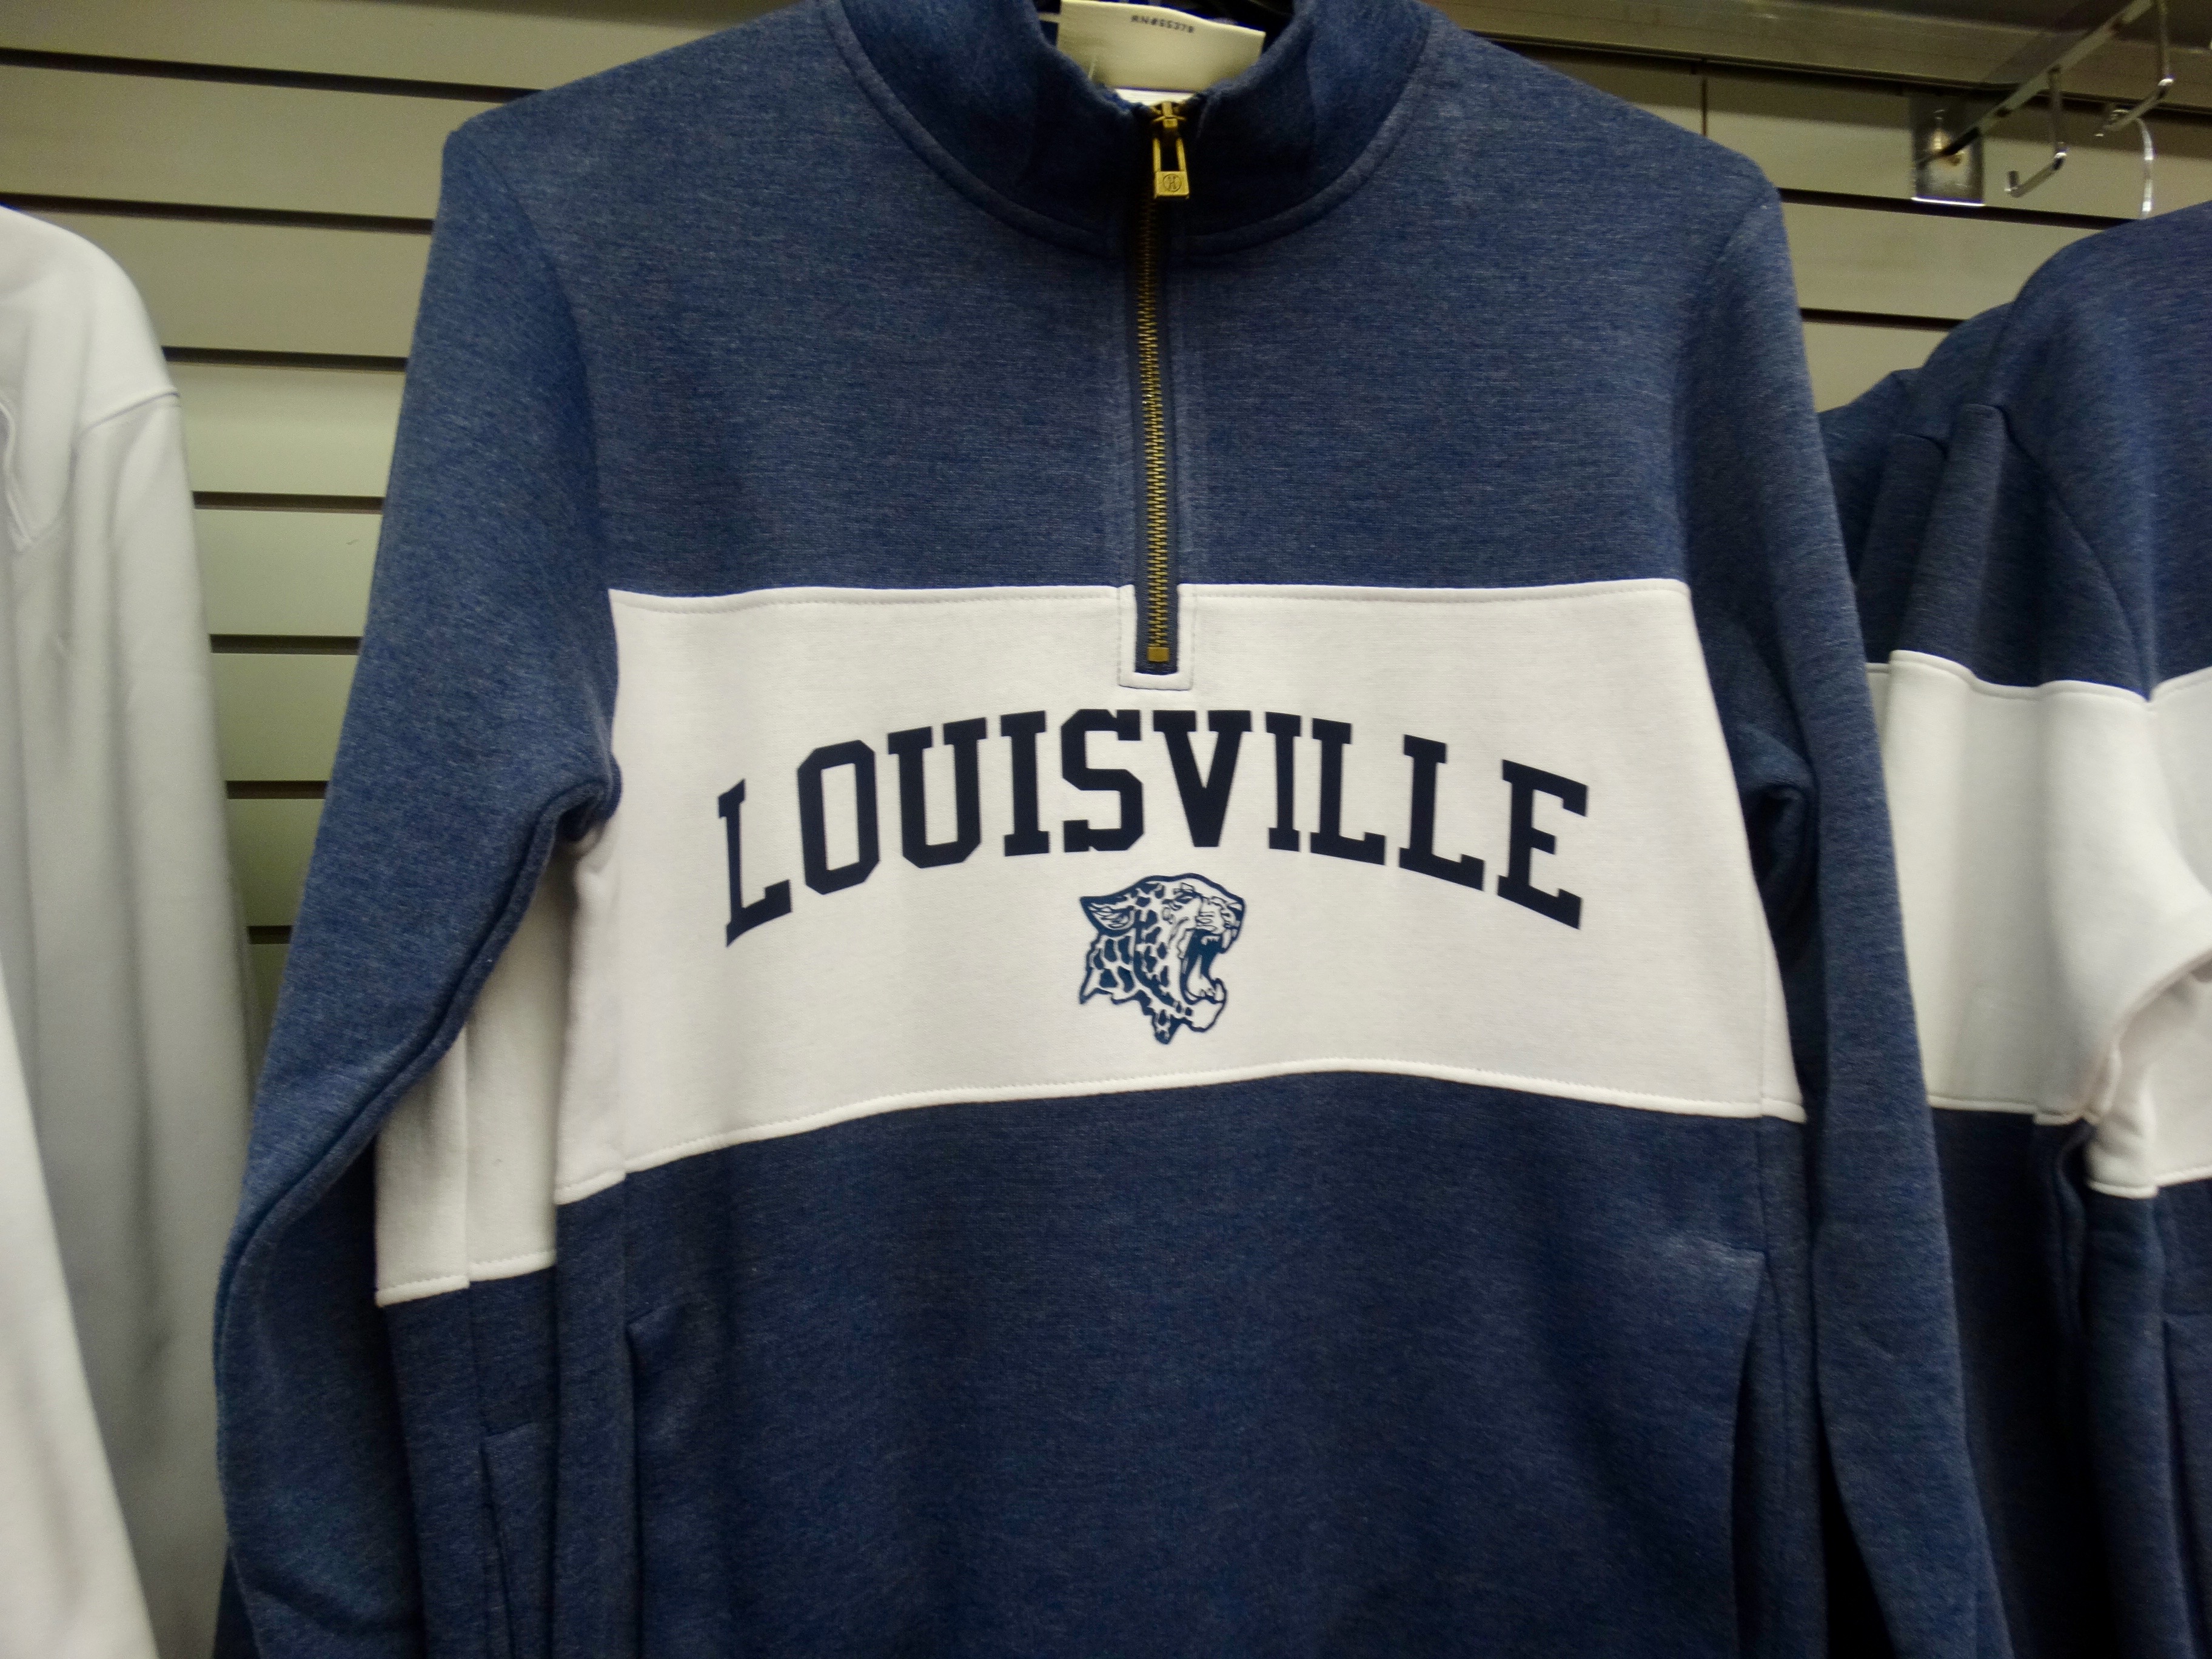 Louisville Doesn't Exist Shirts - Snowshirt